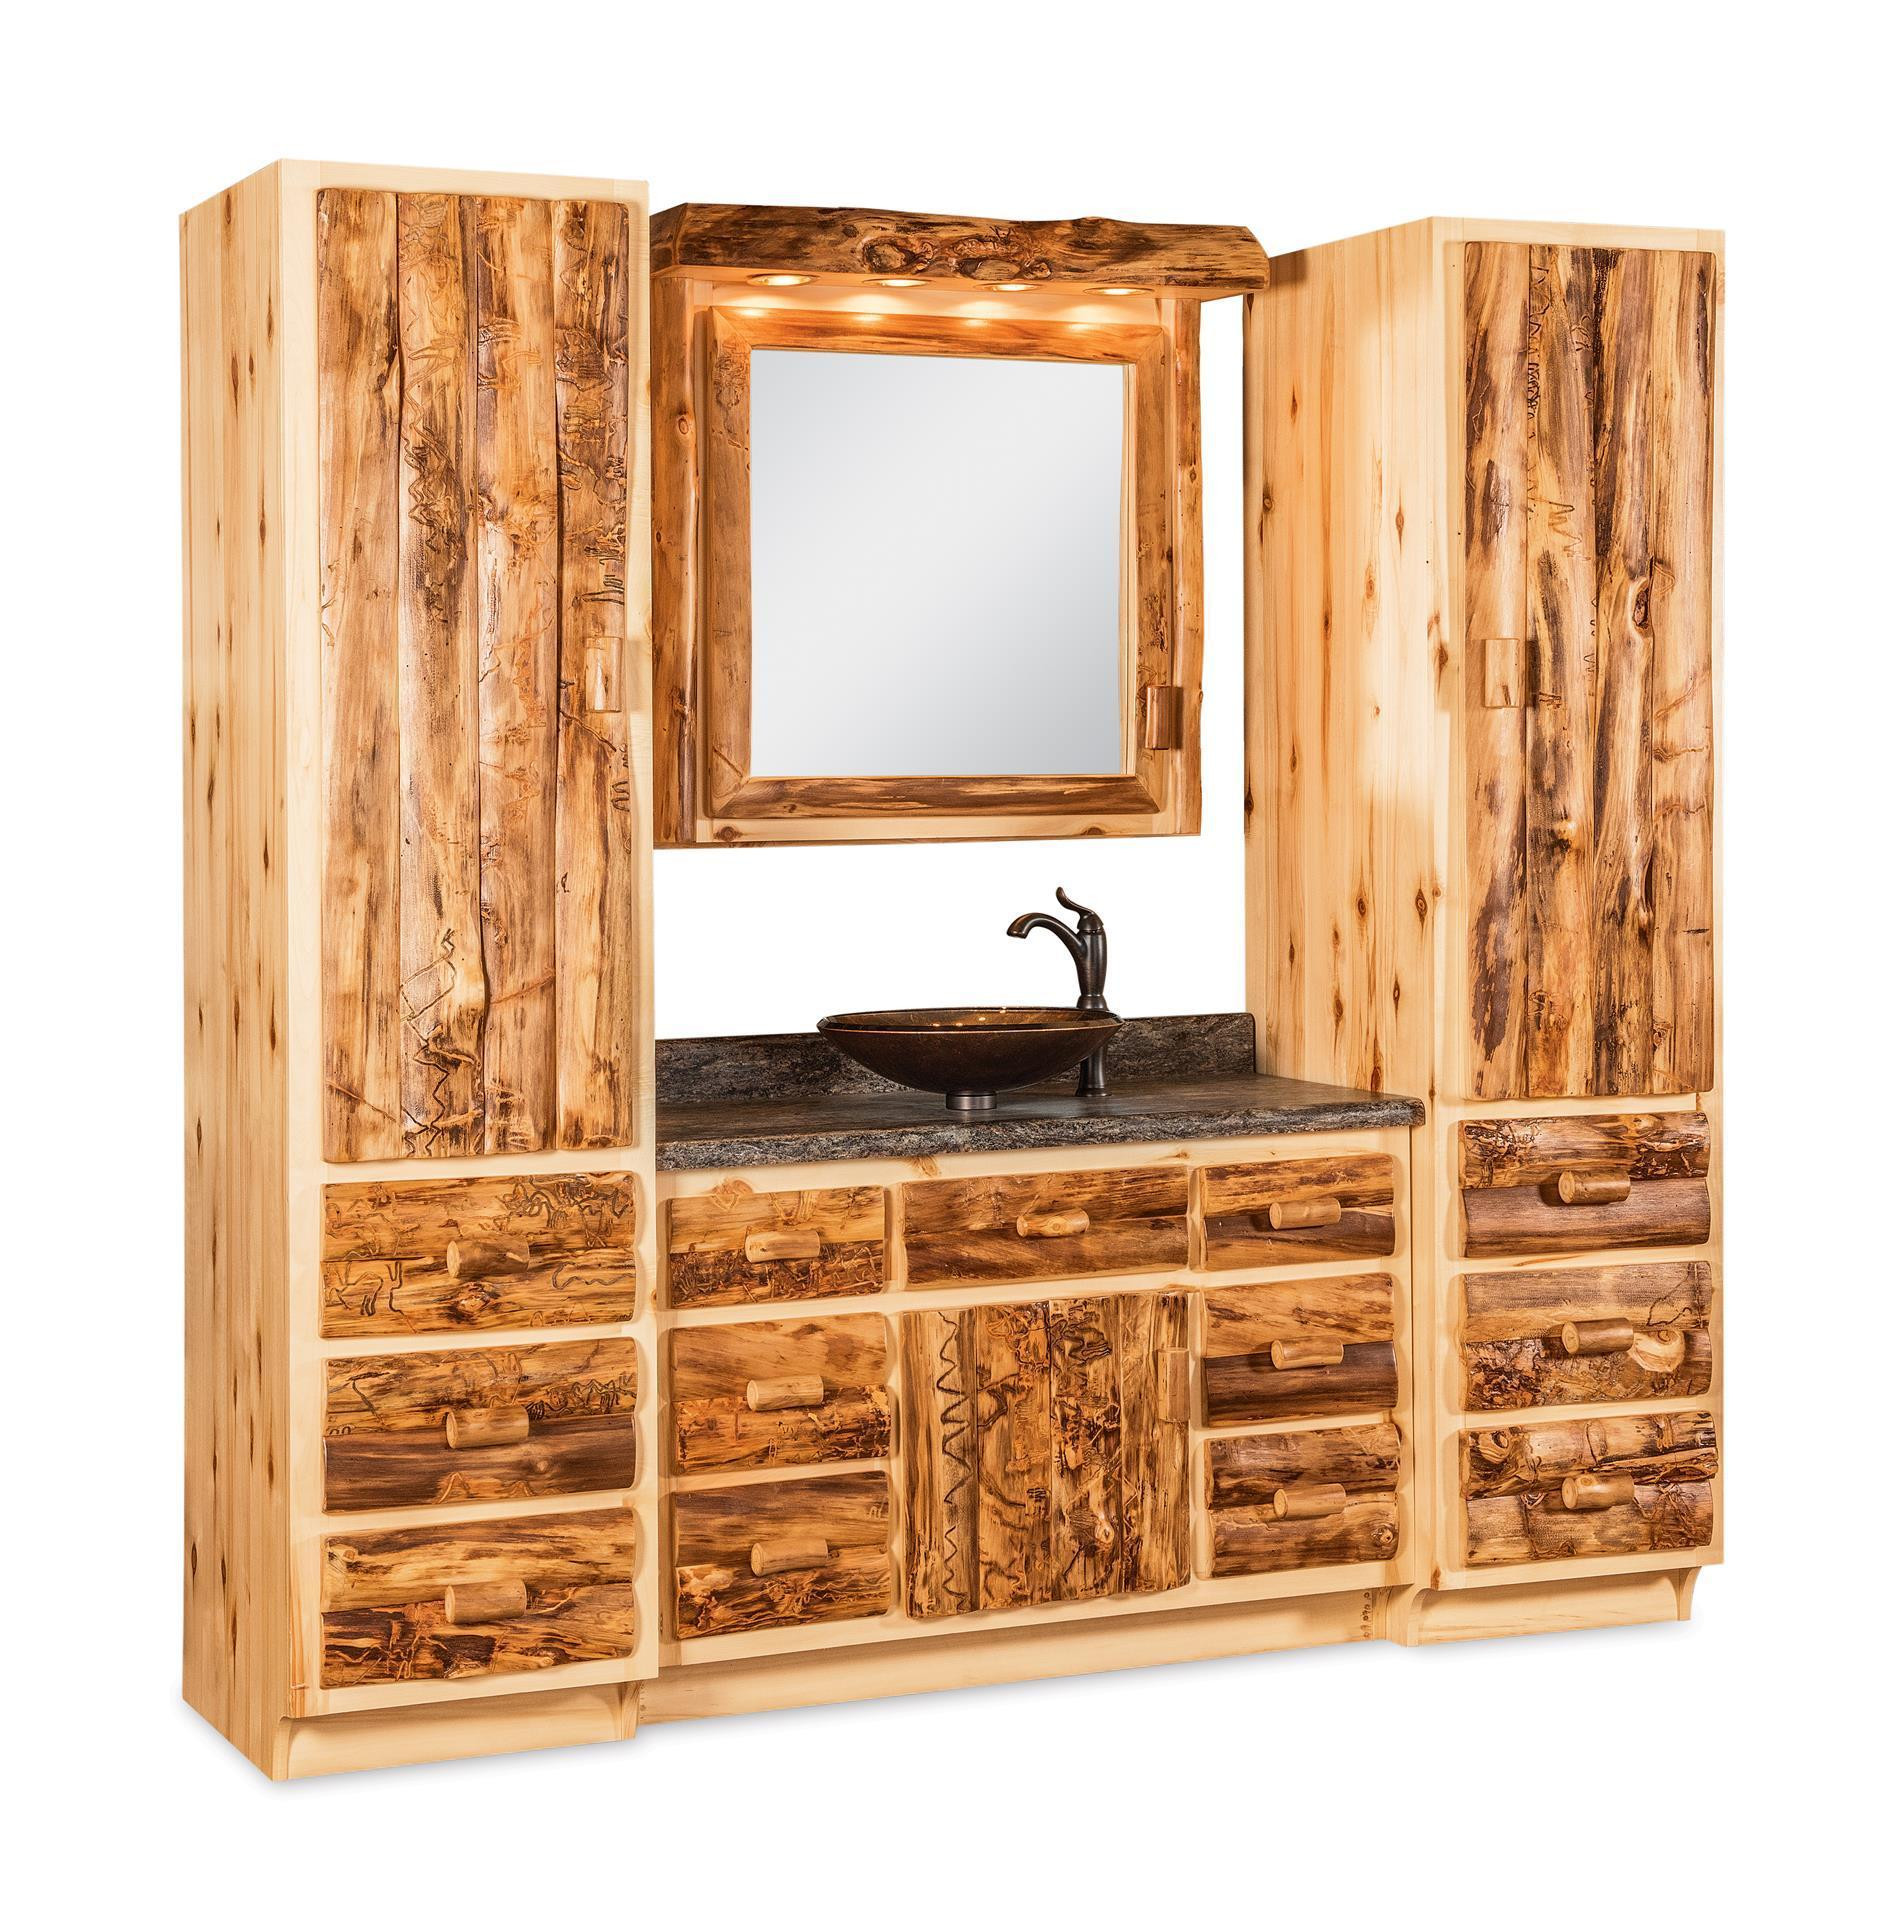 Log Bathroom Vanity
 Rustic Log Cabin Bathroom Vanity From DutchCrafters Amish